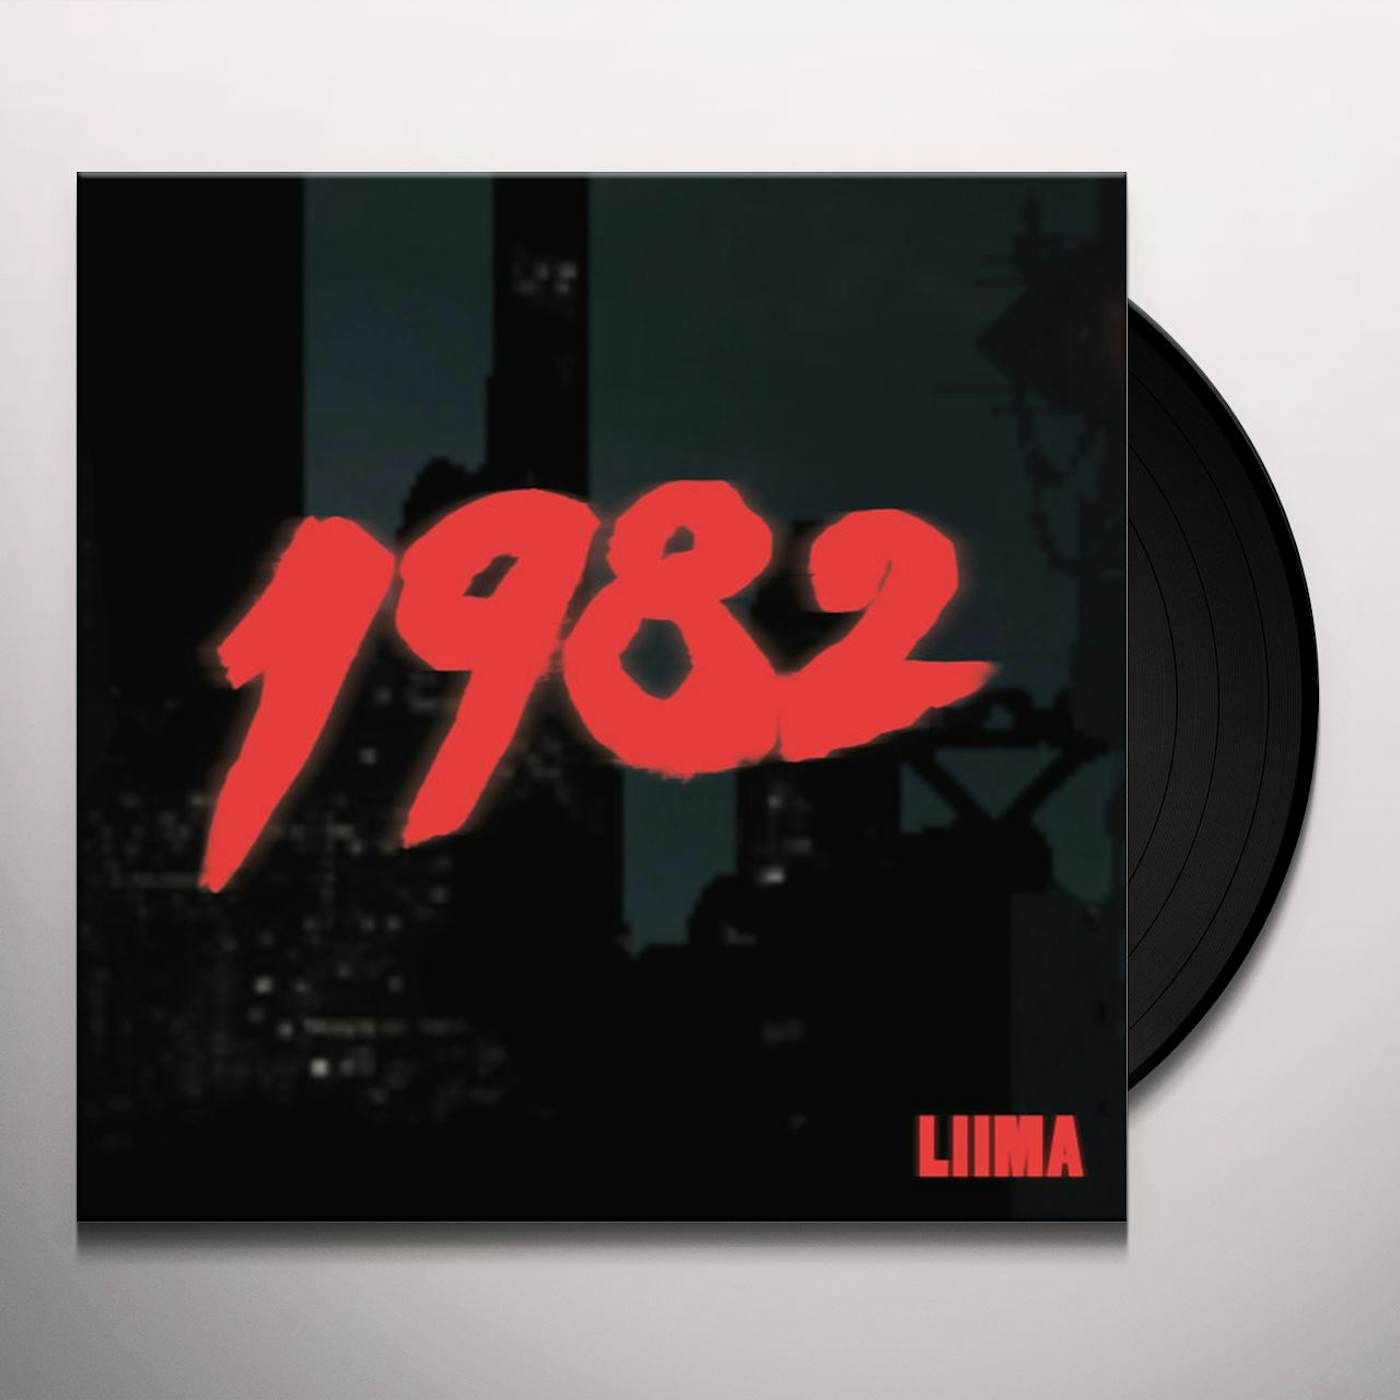 Liima 1982 (DL CARD WITH DIGITAL ONLY BONUS TRACKS) Vinyl Record